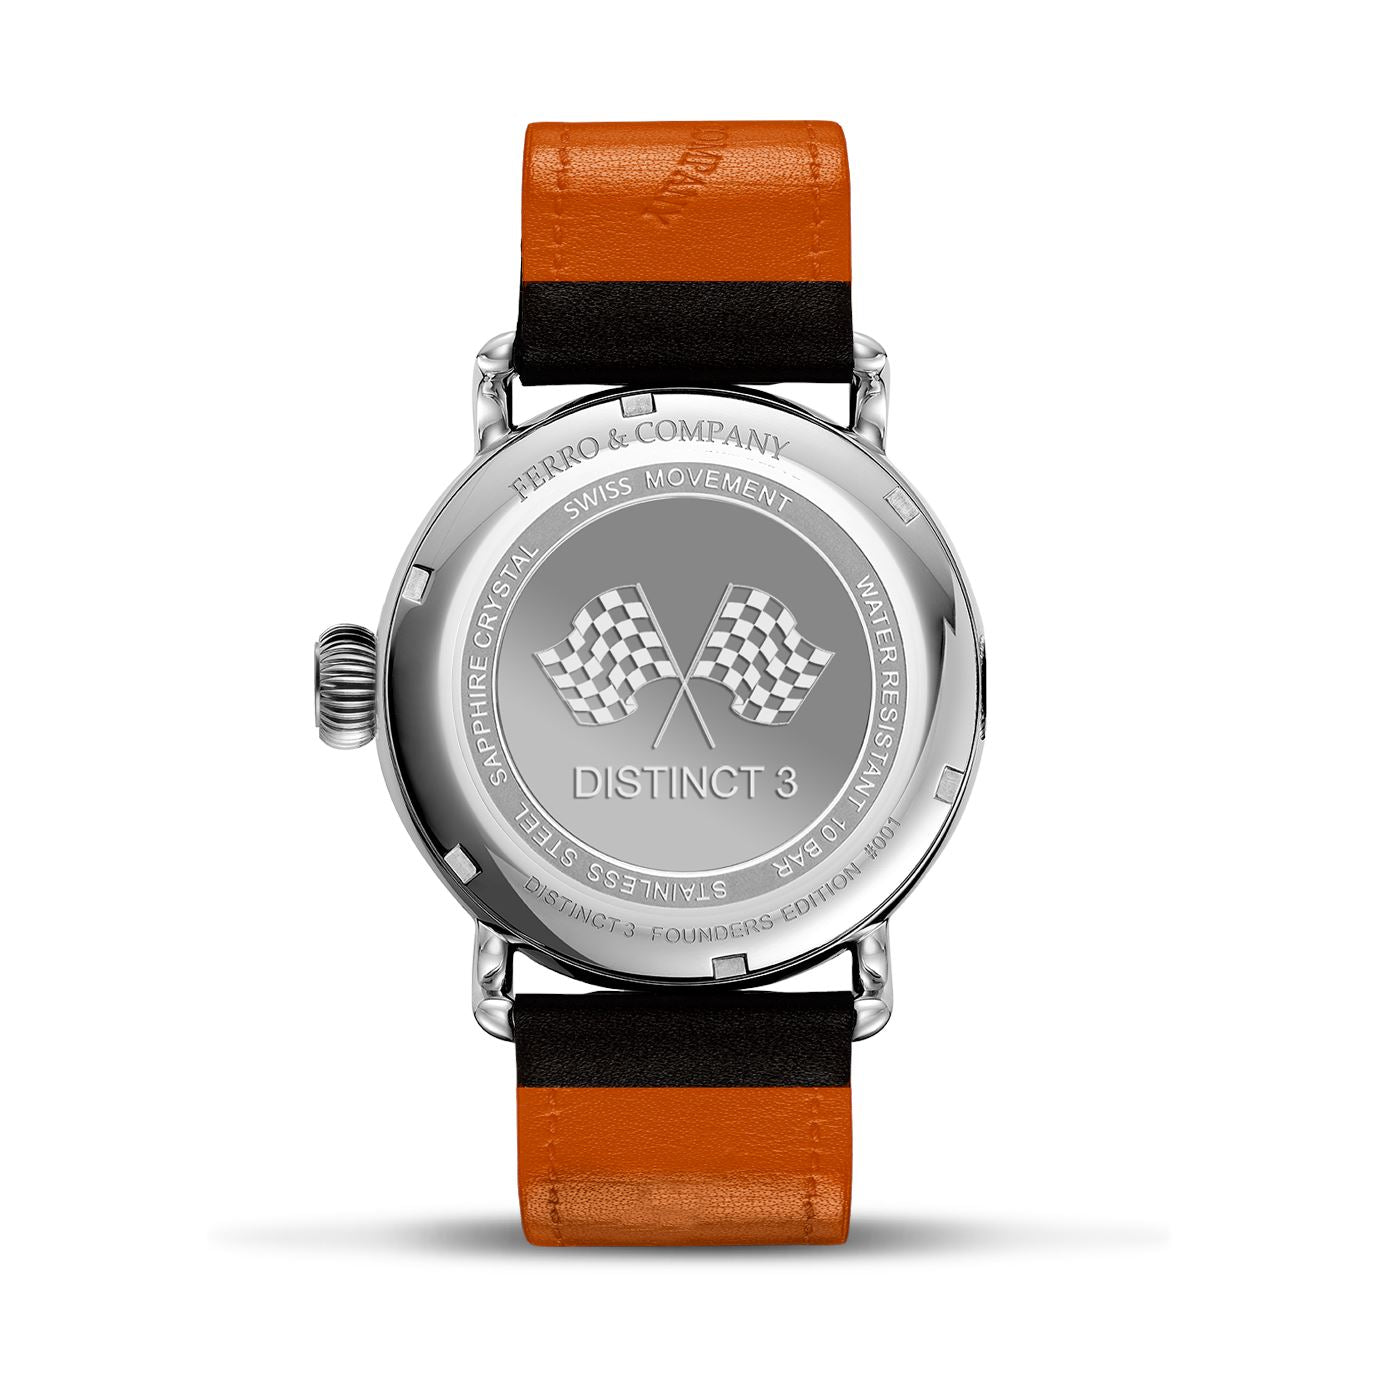 Ferro Watches Distinct 3 Vintage Style One Hand Racing Watch Grand Prix - Ferro &amp; Company Watches